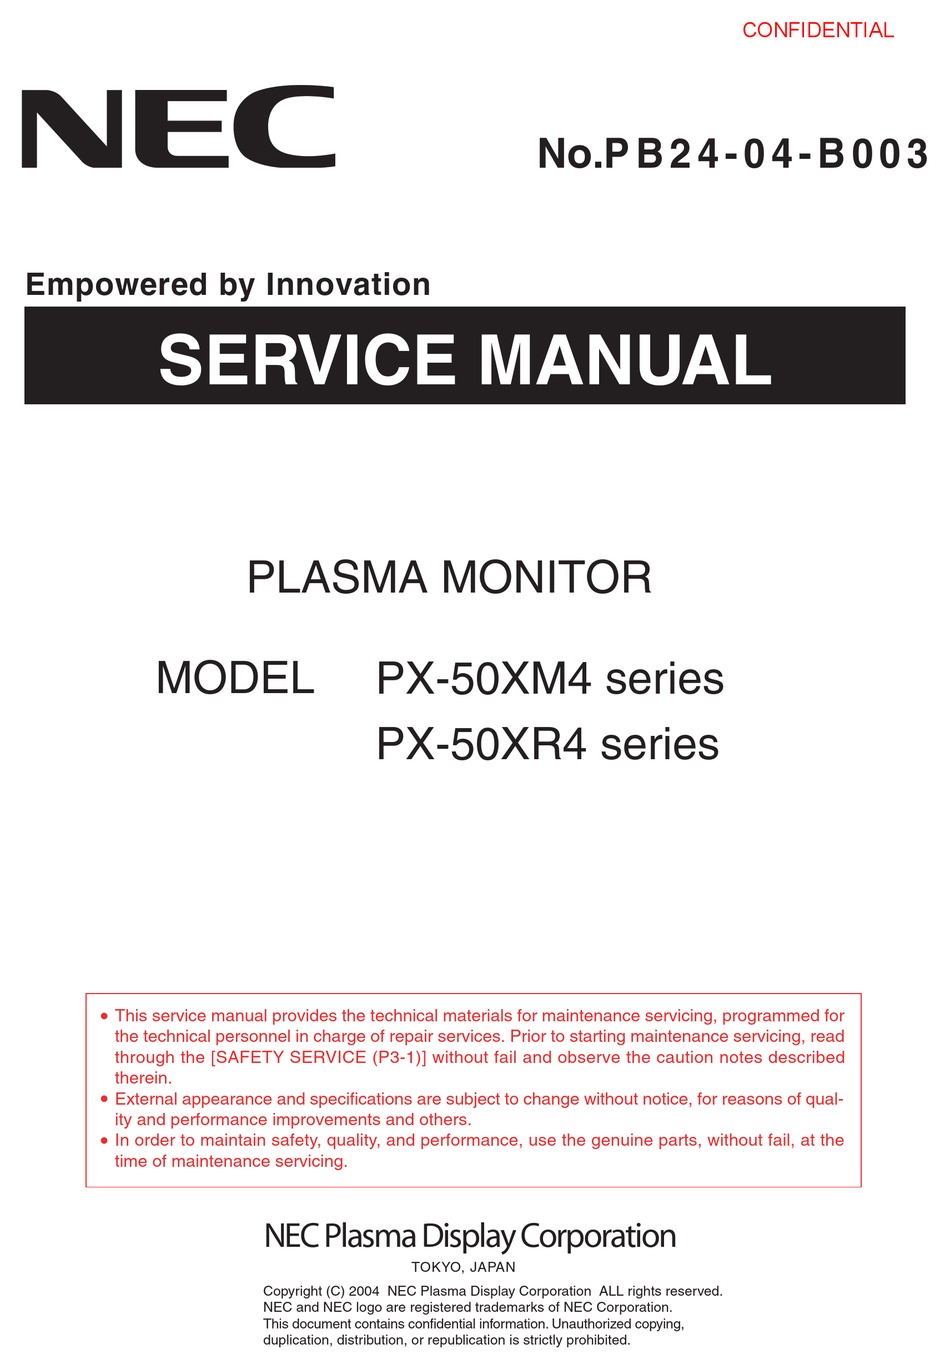 PX42XM4A Replacement Remote for NEC 42XR4A PLASMASYNC 61XM4 